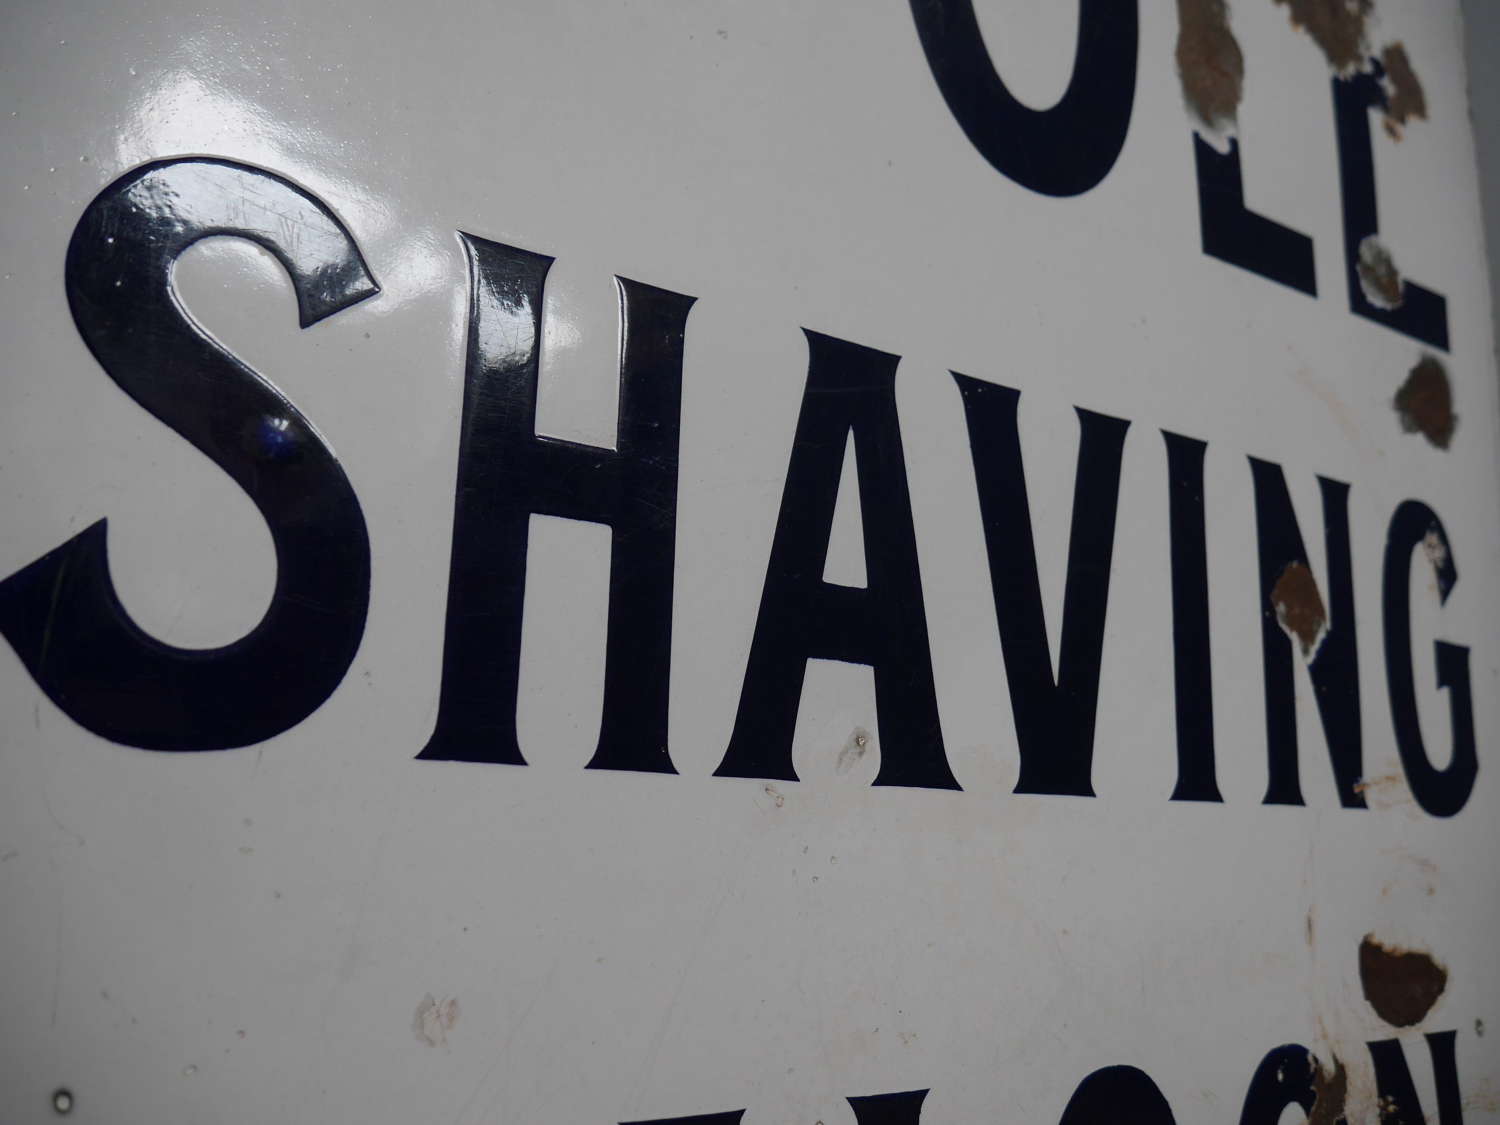 The Better 'Ole Shaving Saloon